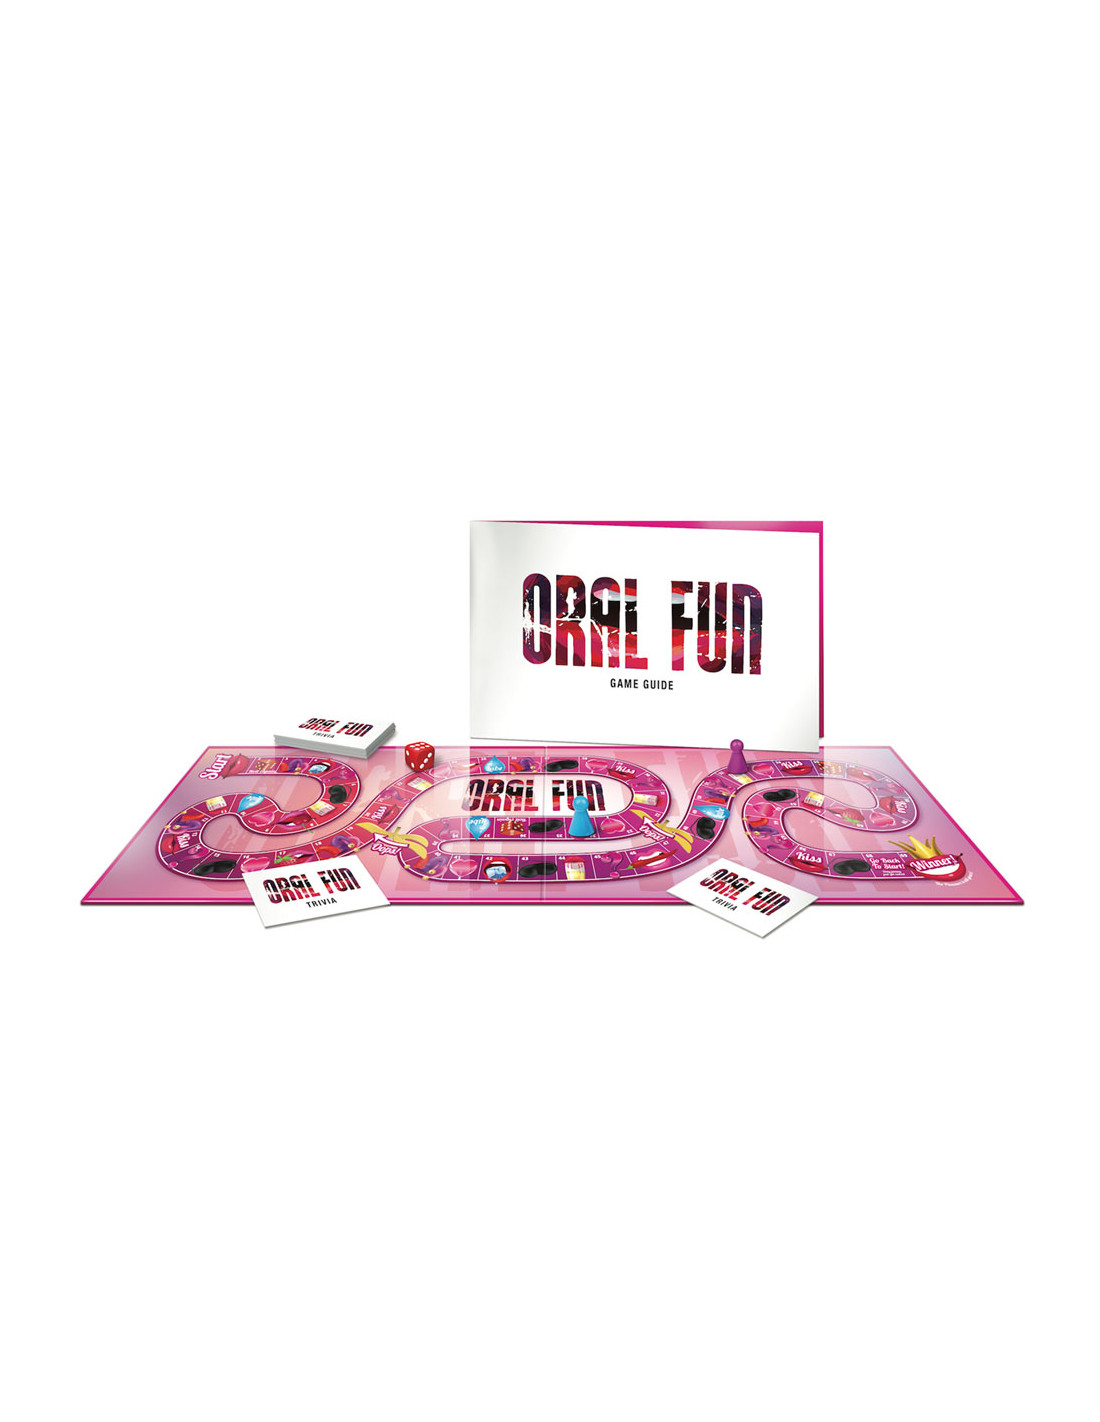 Creative Conceptions Oral fun : jeu coquin pour couple RXcqOPnj